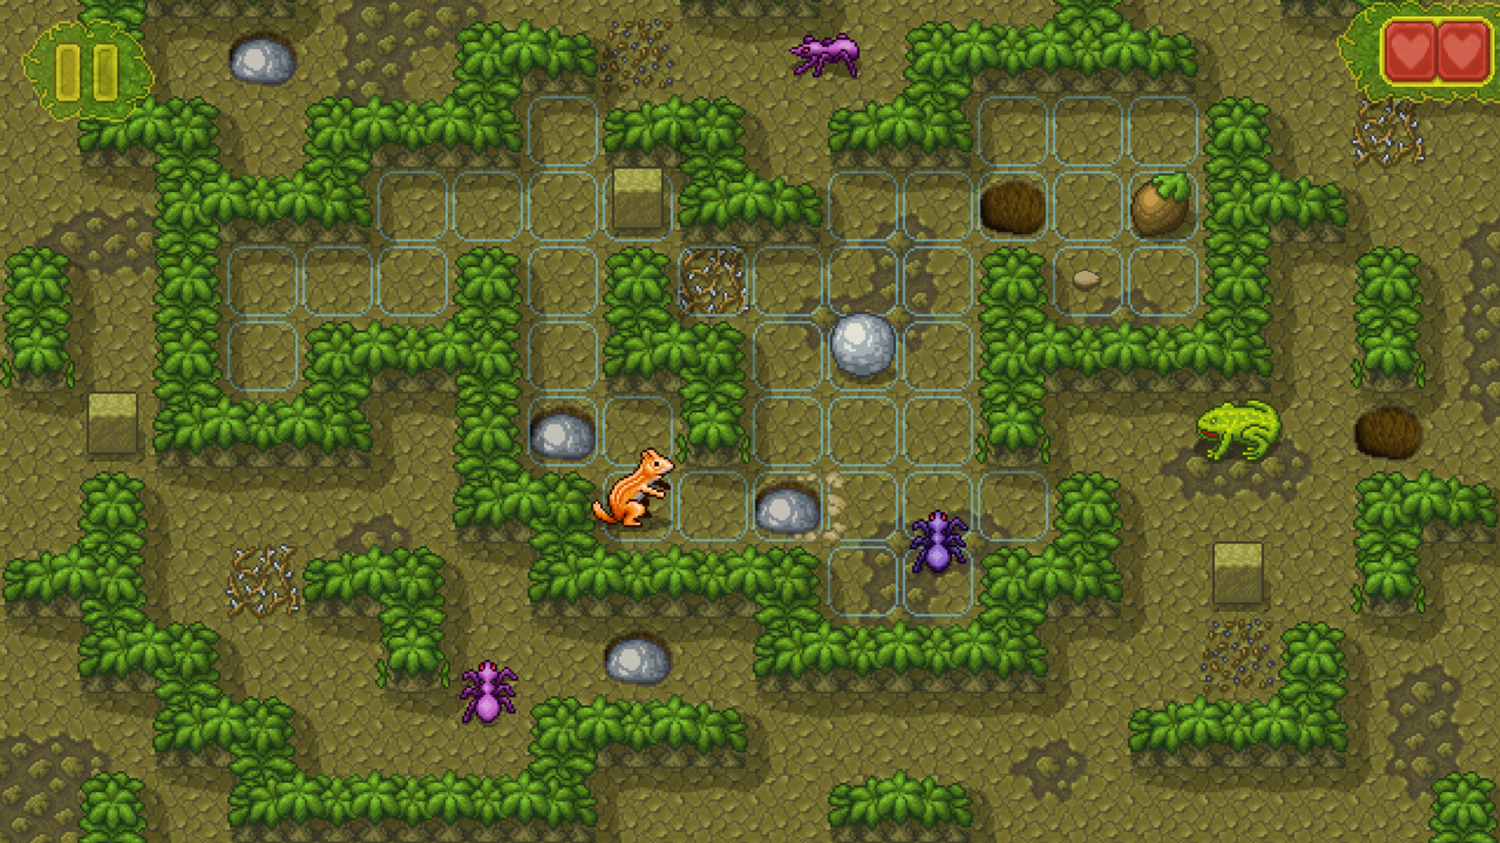 Sokoban Elite Chipmunk's Adventure Game Play Screenshot.